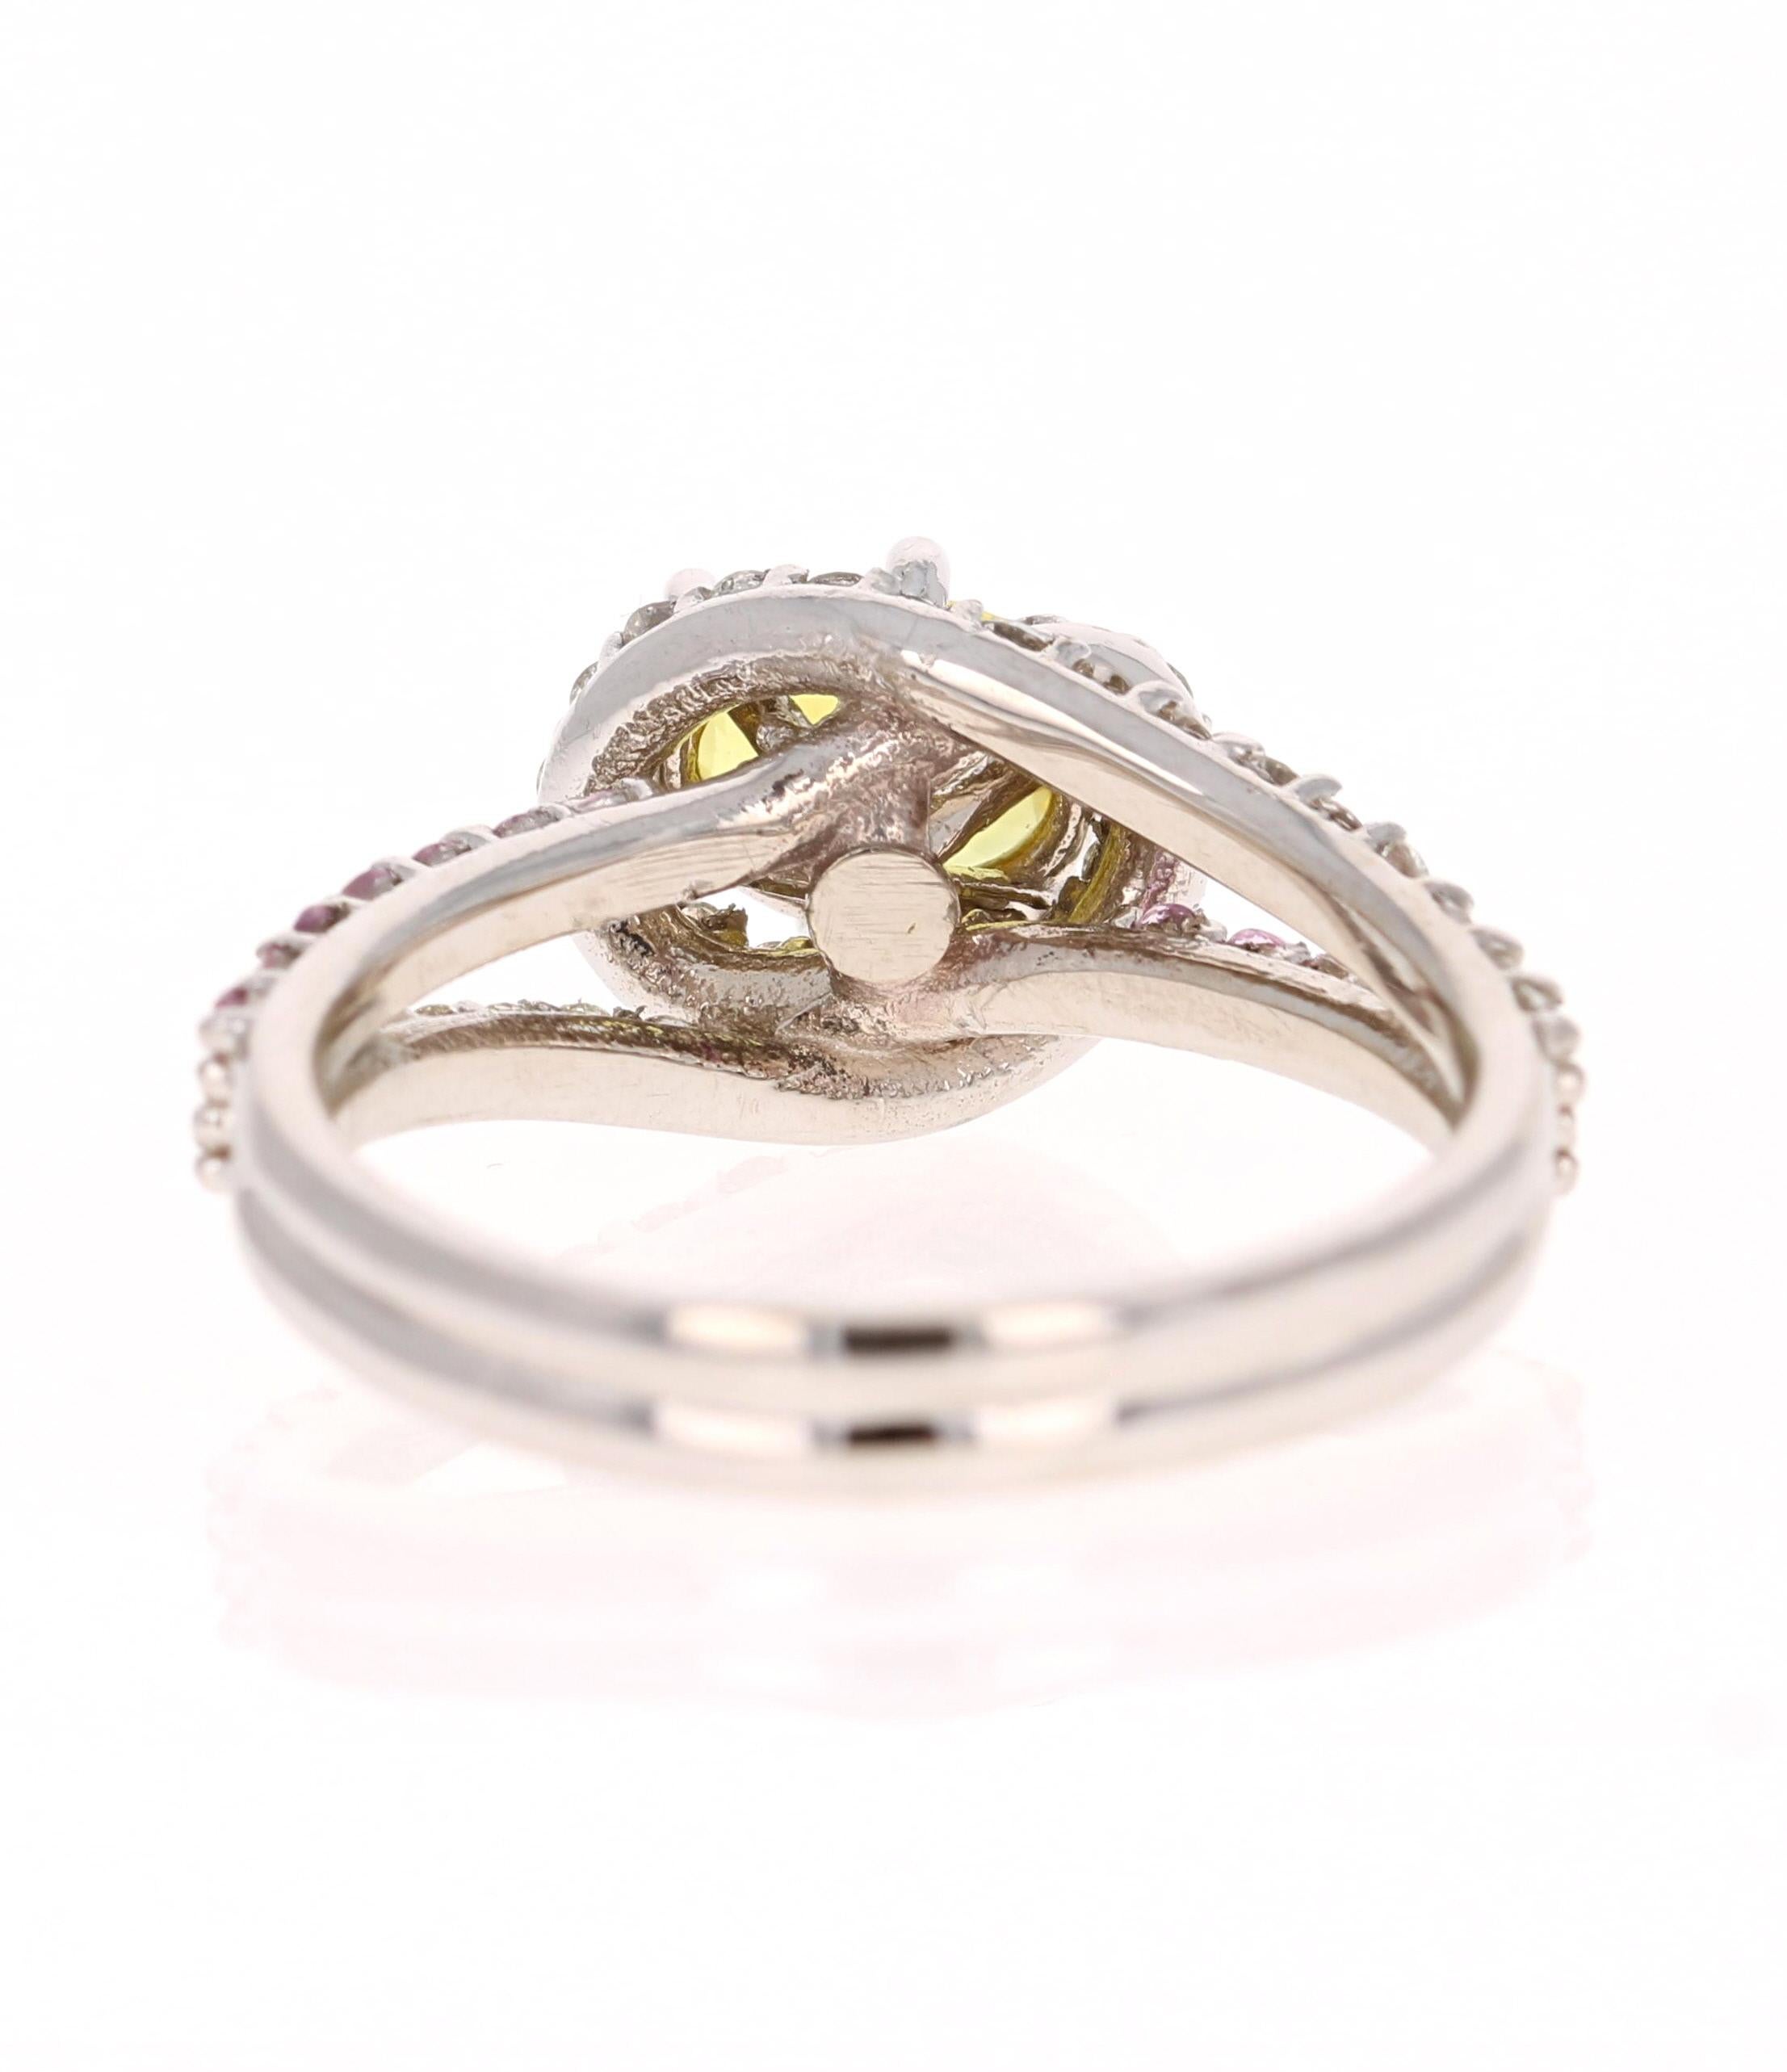 Oval Cut 1.48 Carat Yellow Sapphire Pink Sapphire Diamond 14 Karat White Gold Ring